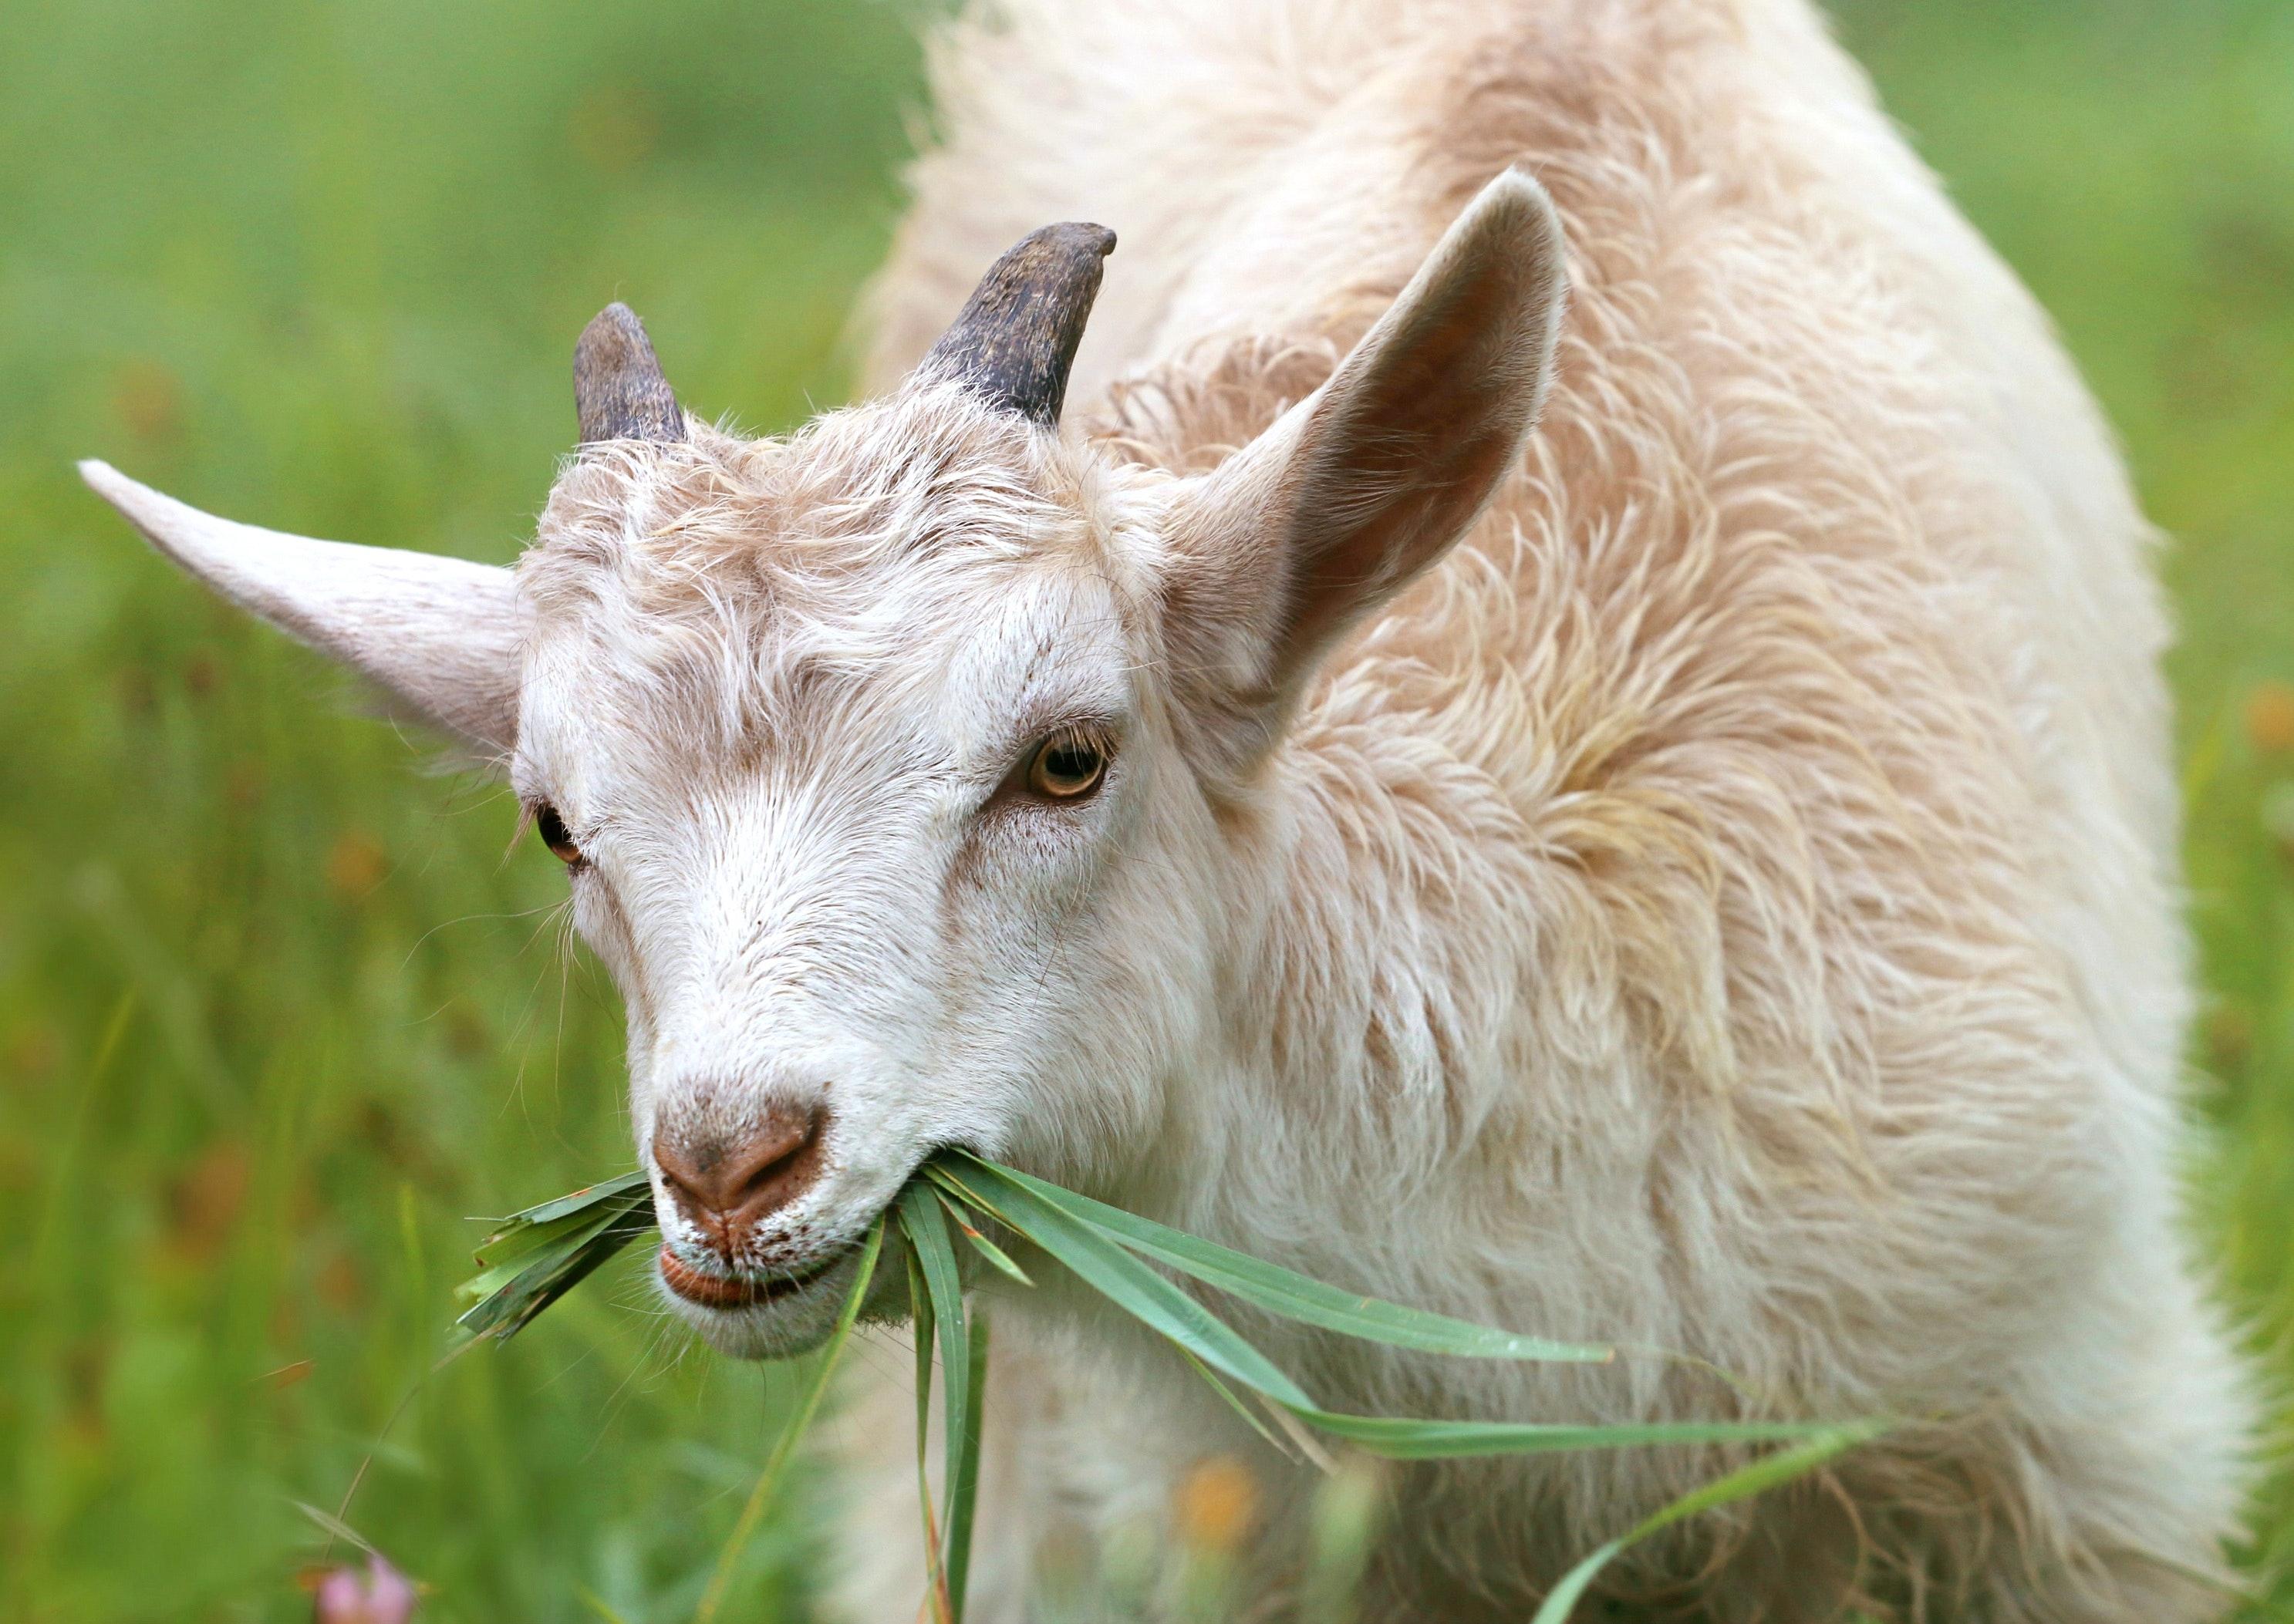 White Goat Eating Grass during Daytime · Free